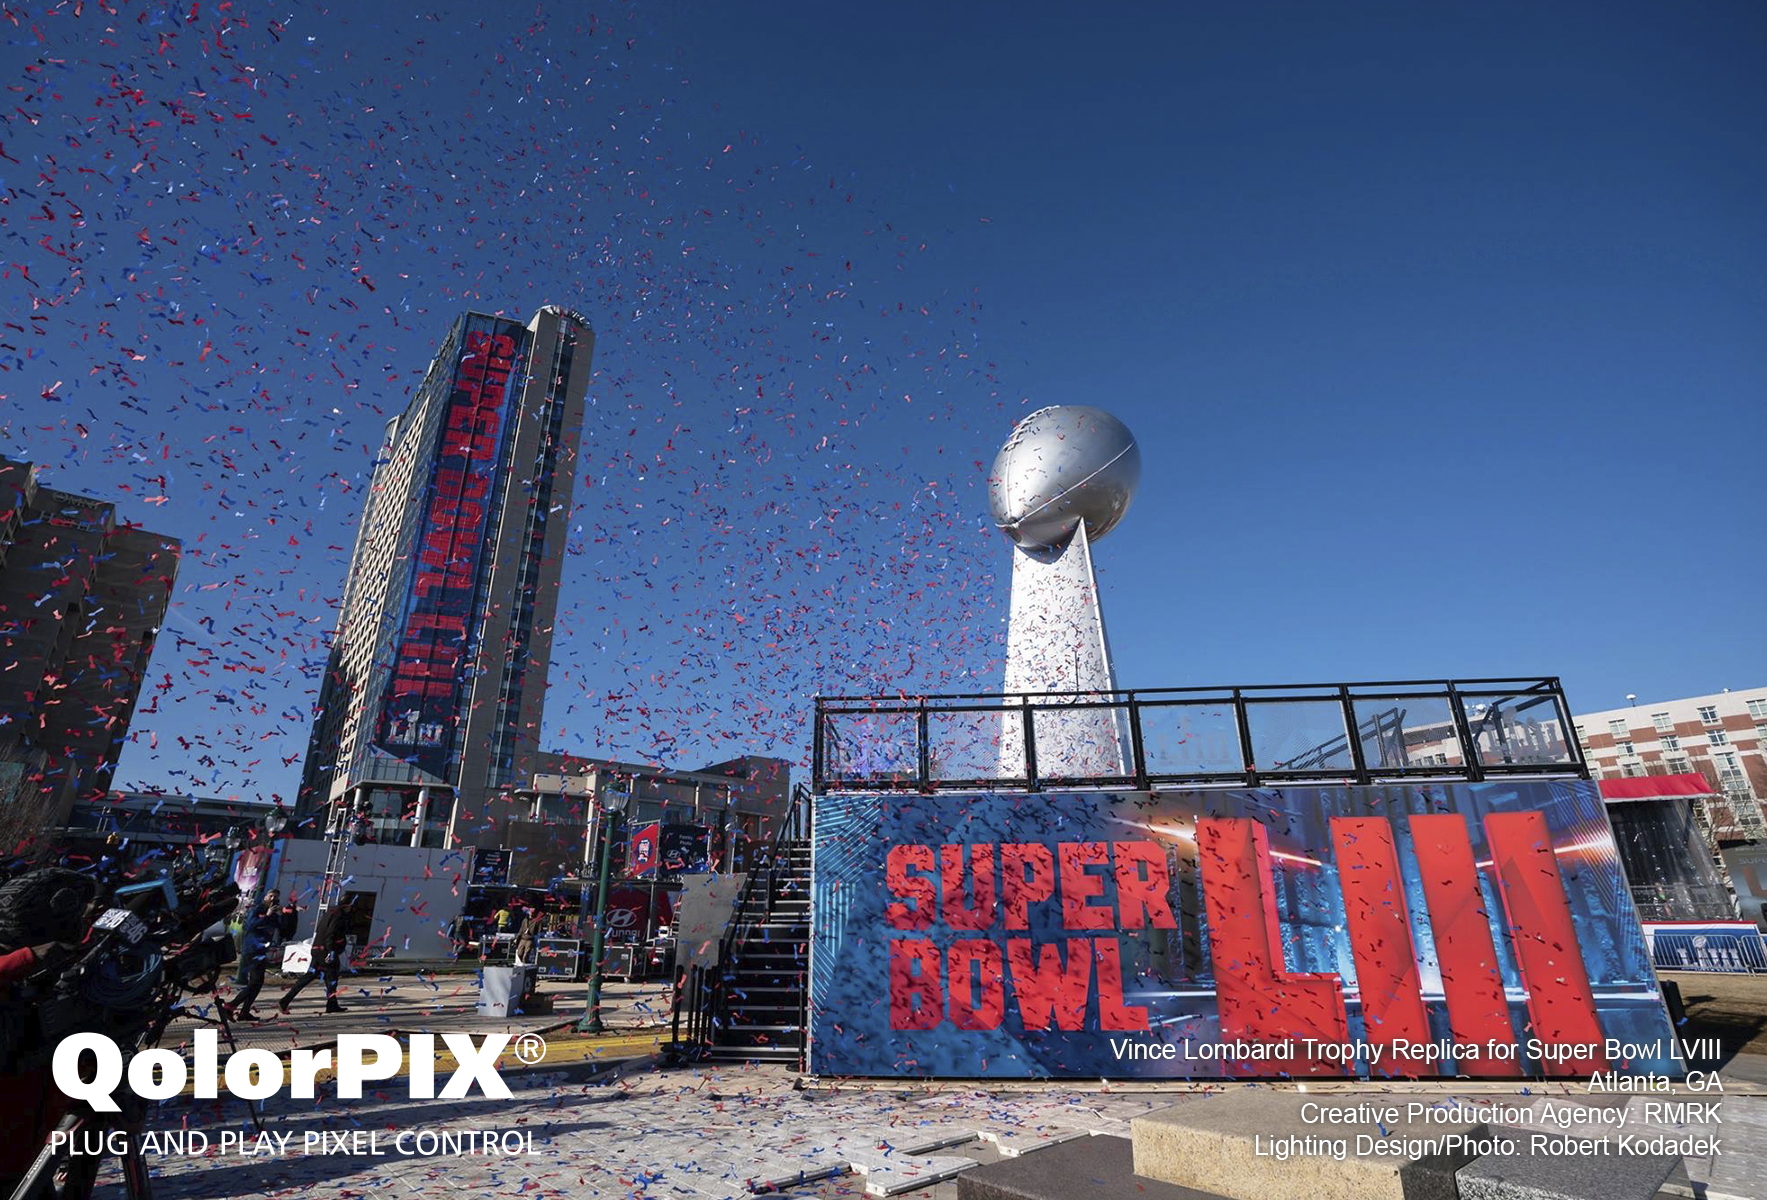 QolorPIX at the Lombardi Trophy Replica for Super Bowl LVIII in Atlanta, GA